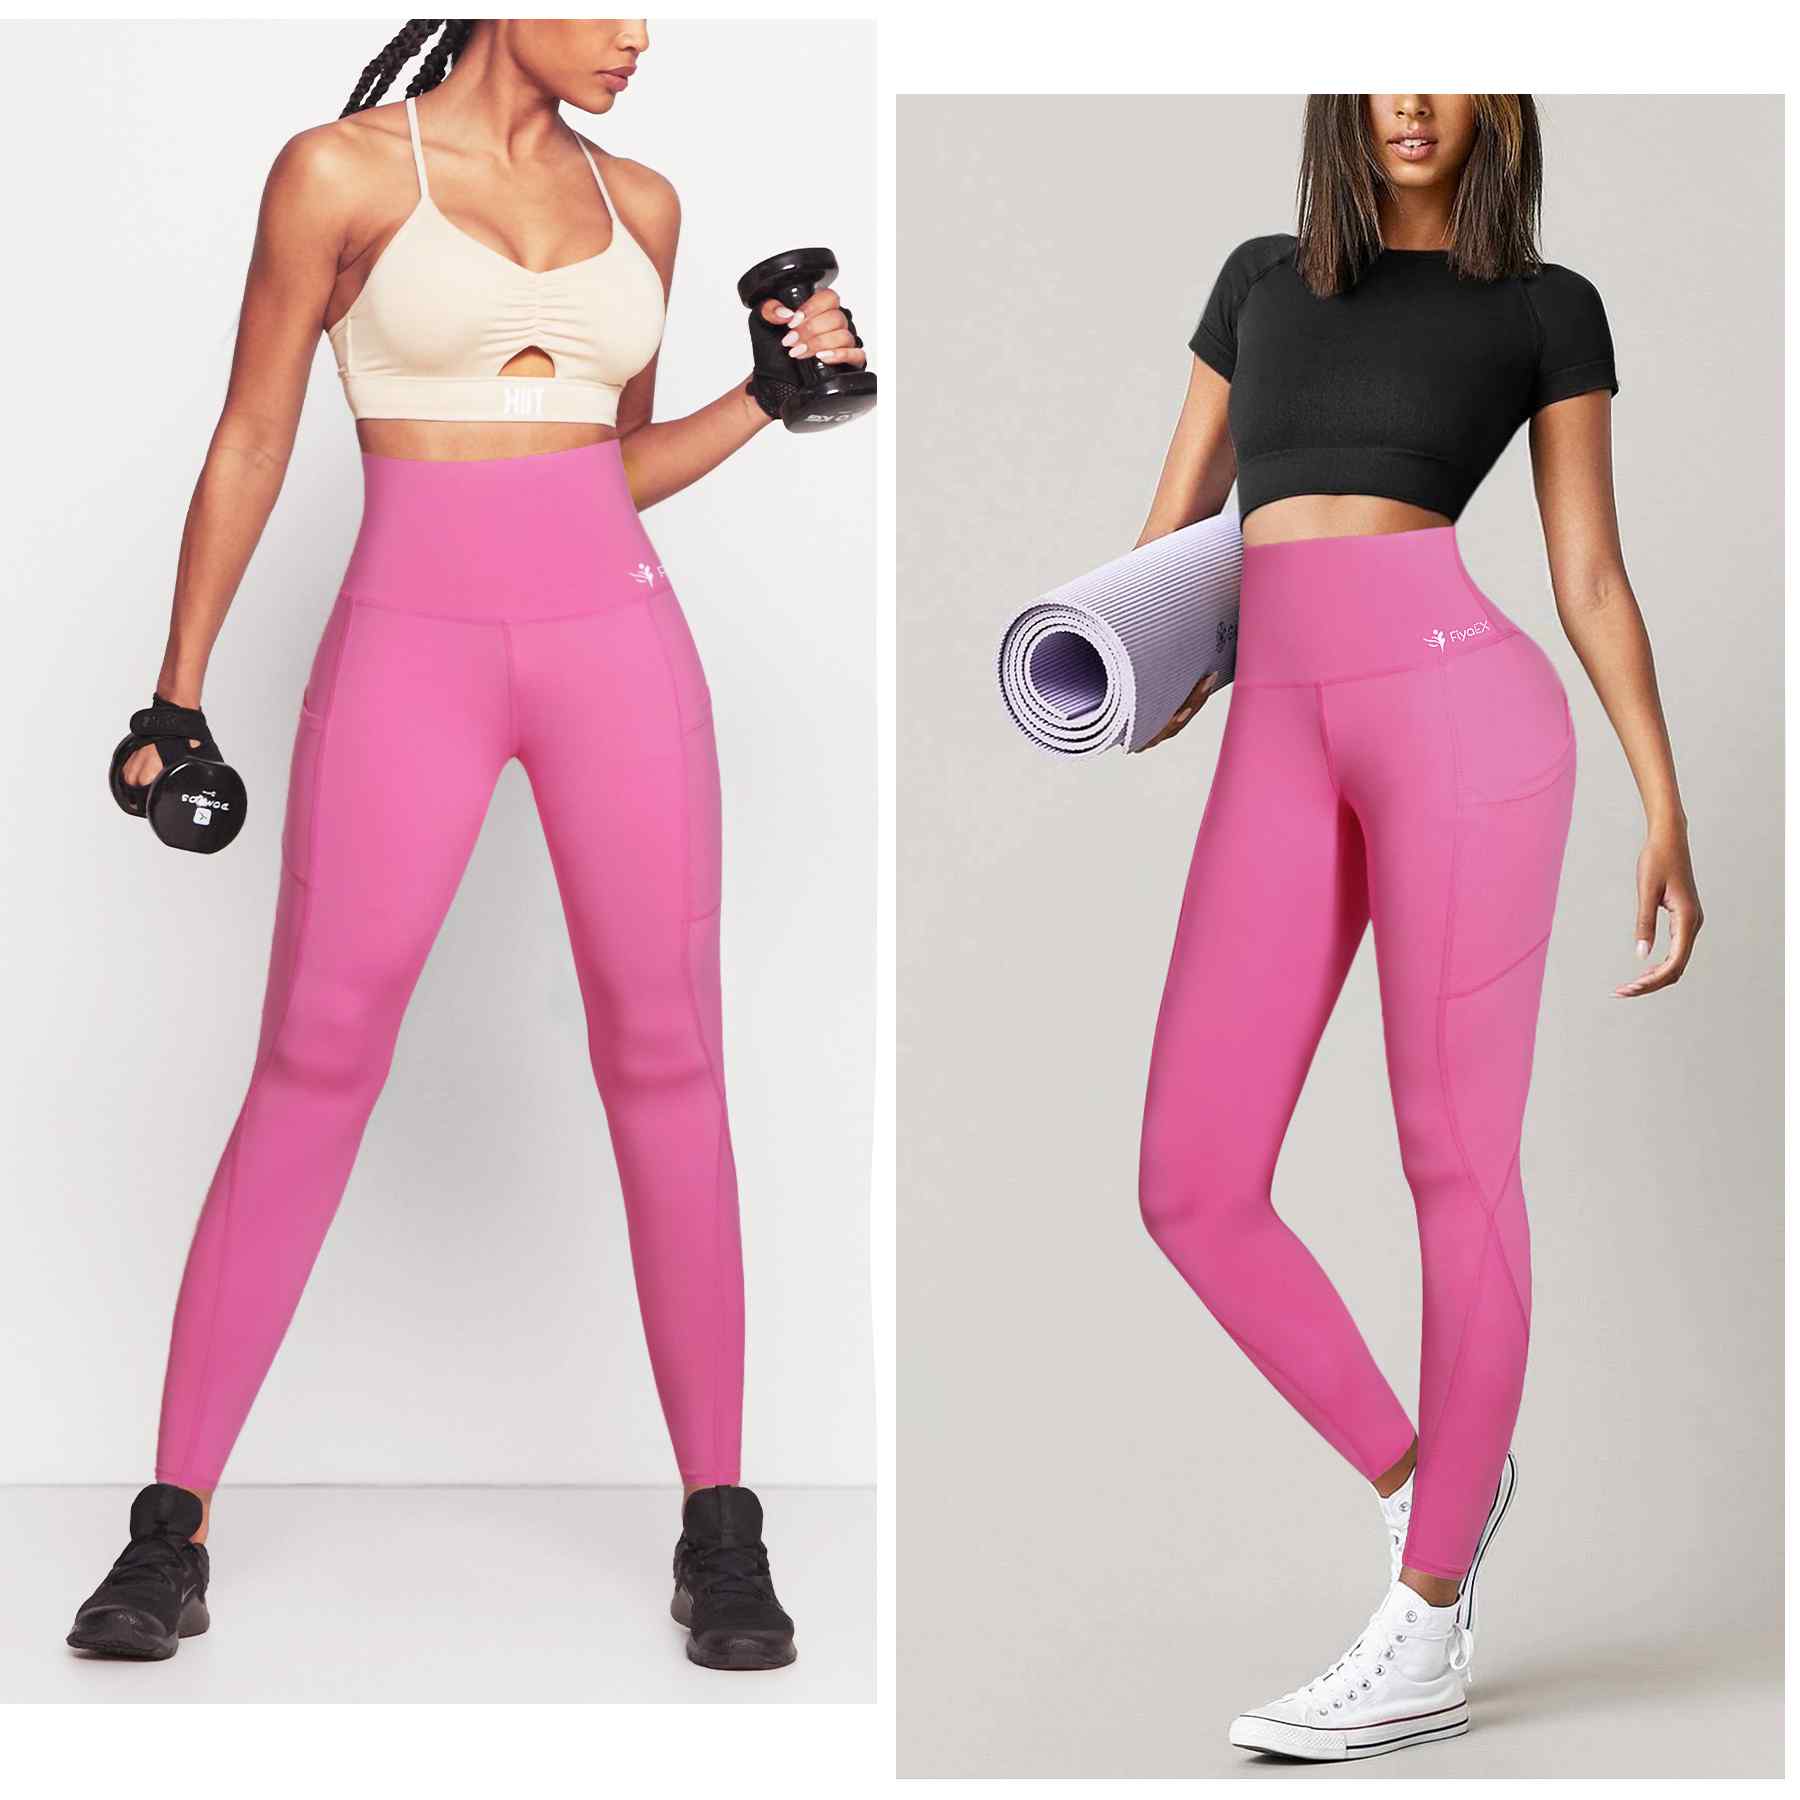 Pxiakgy yoga pants women Fashion Tie-Dye Women's Wear Casual Yoga Yoga  Seamless Pants Shorts Yoga Sports Yoga Pants shorts for women Pink + S